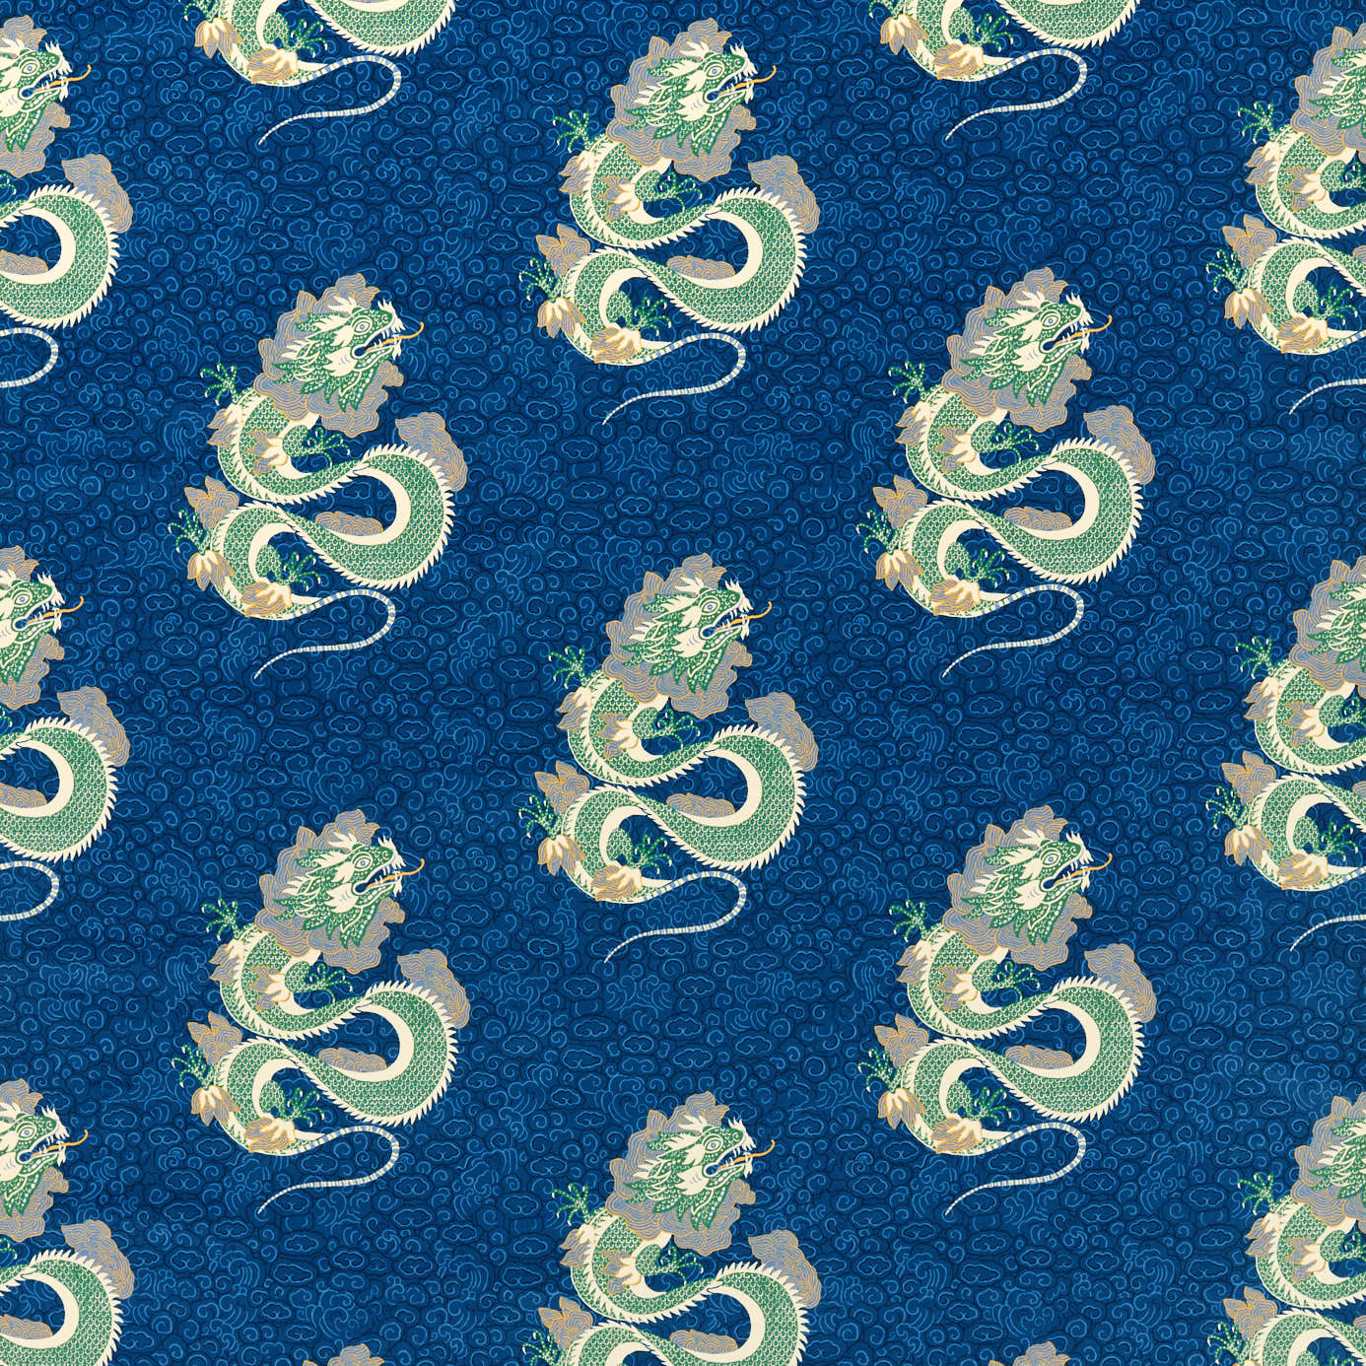 Water Dragon Fabric - Blue